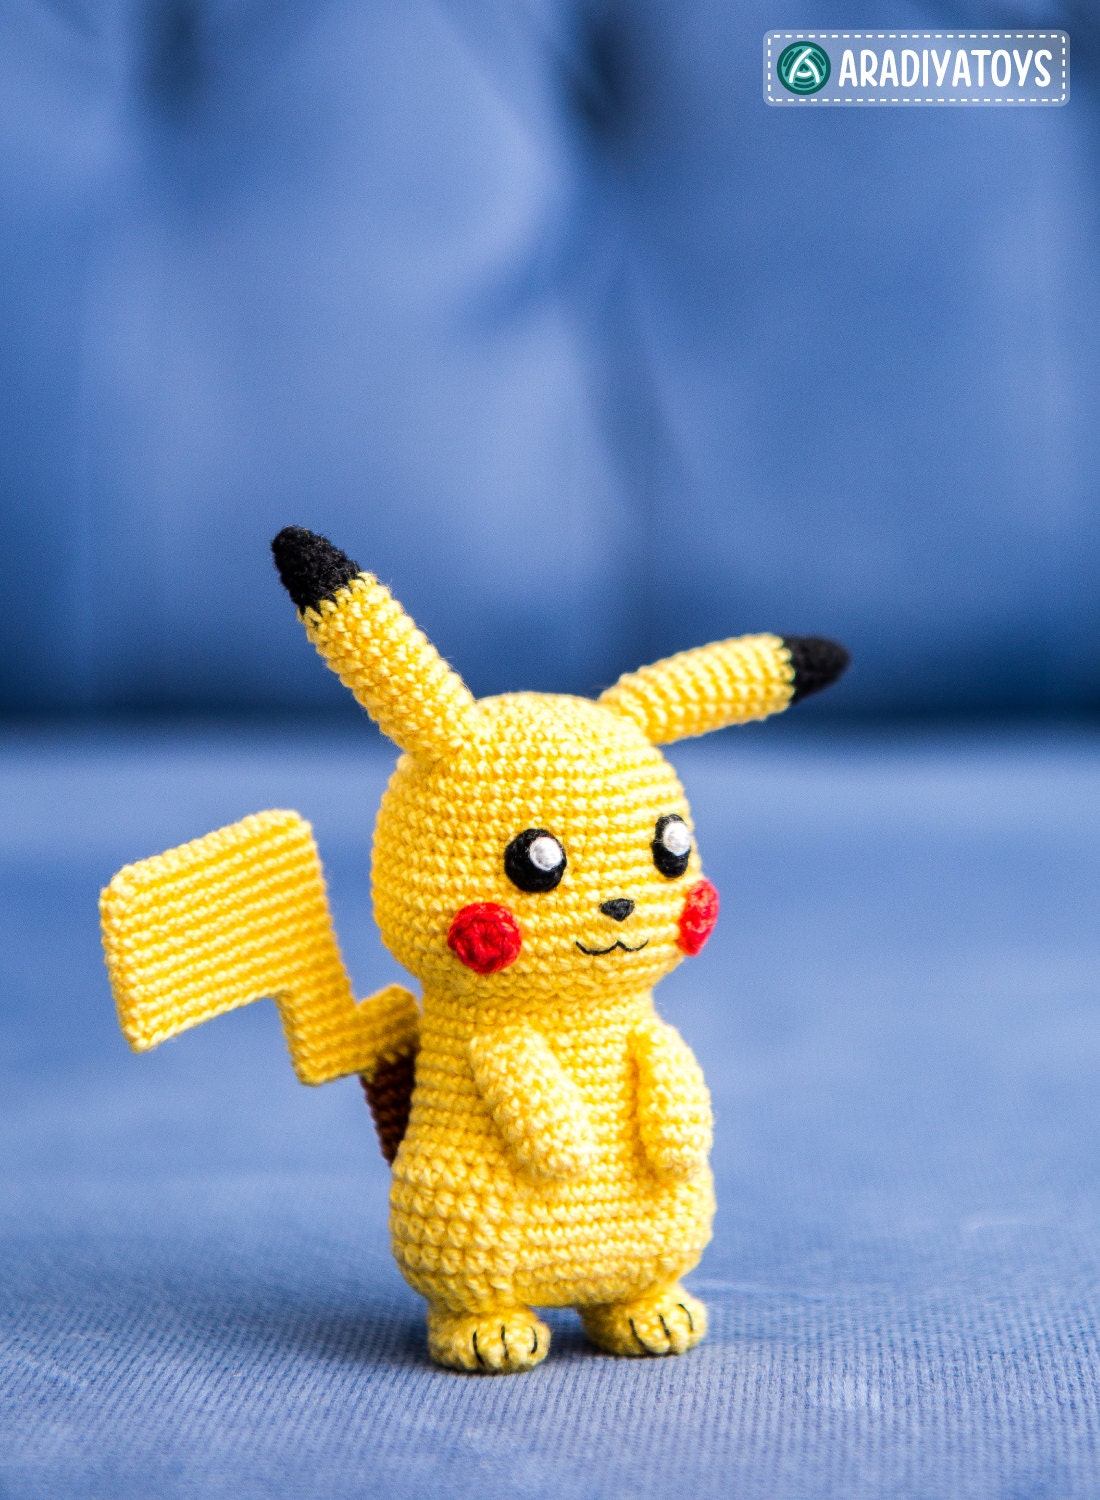 Crochet Pattern of Pikachu from Pokemon Amigurumi